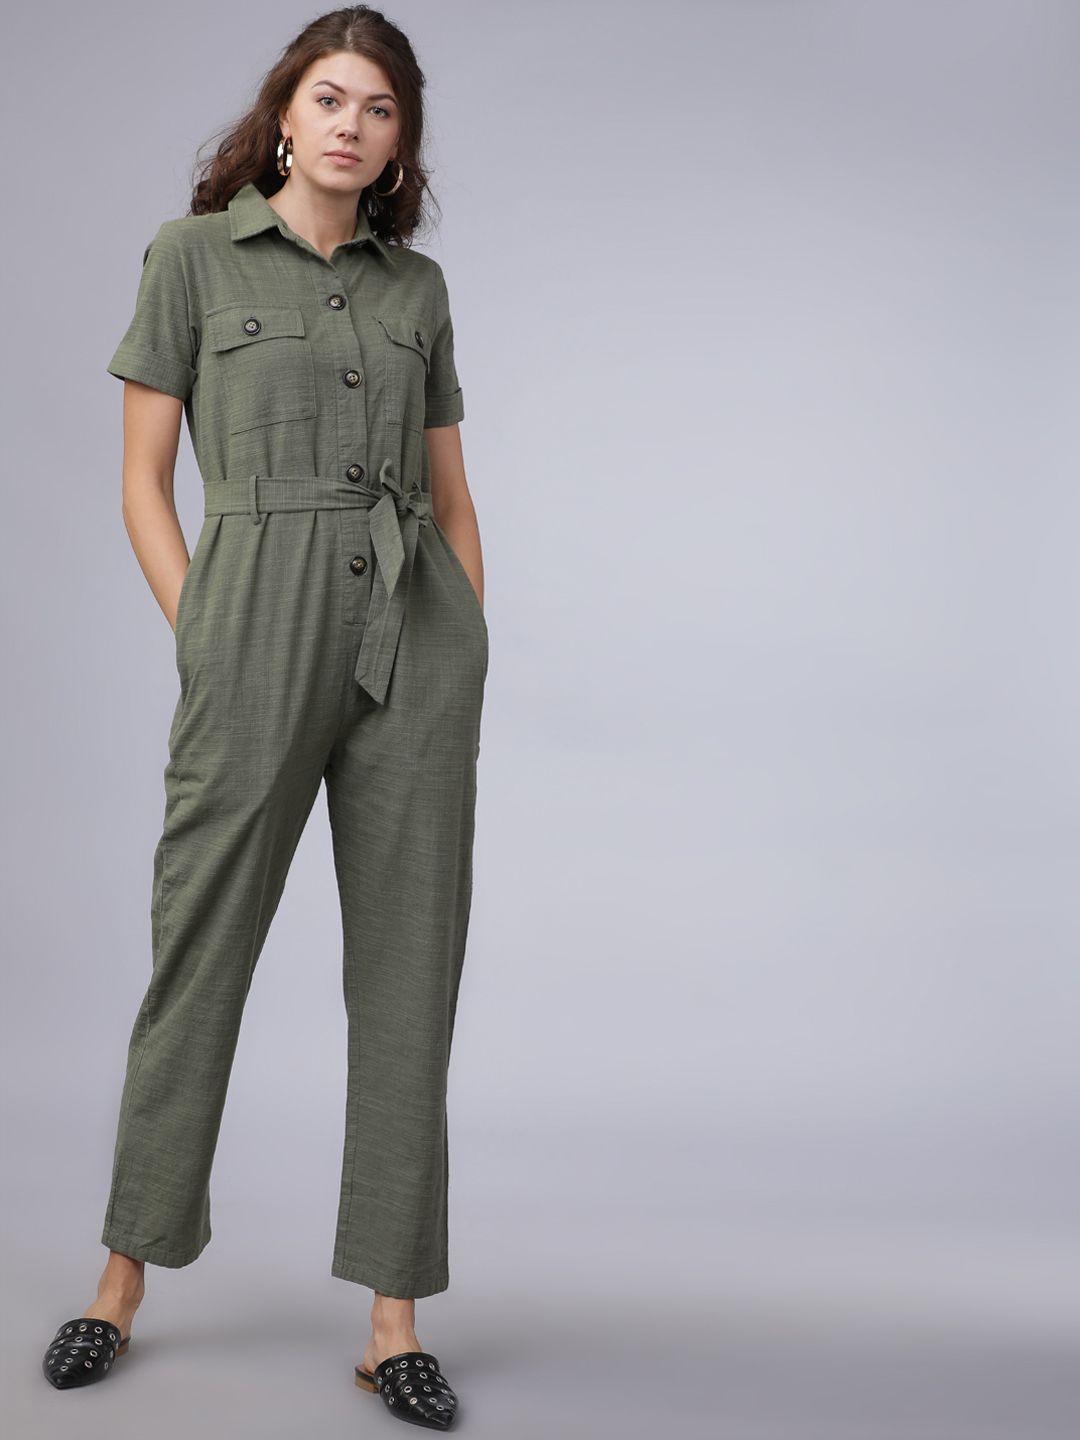 tokyo-talkies-women-sage-green-solid-basic-jumpsuit